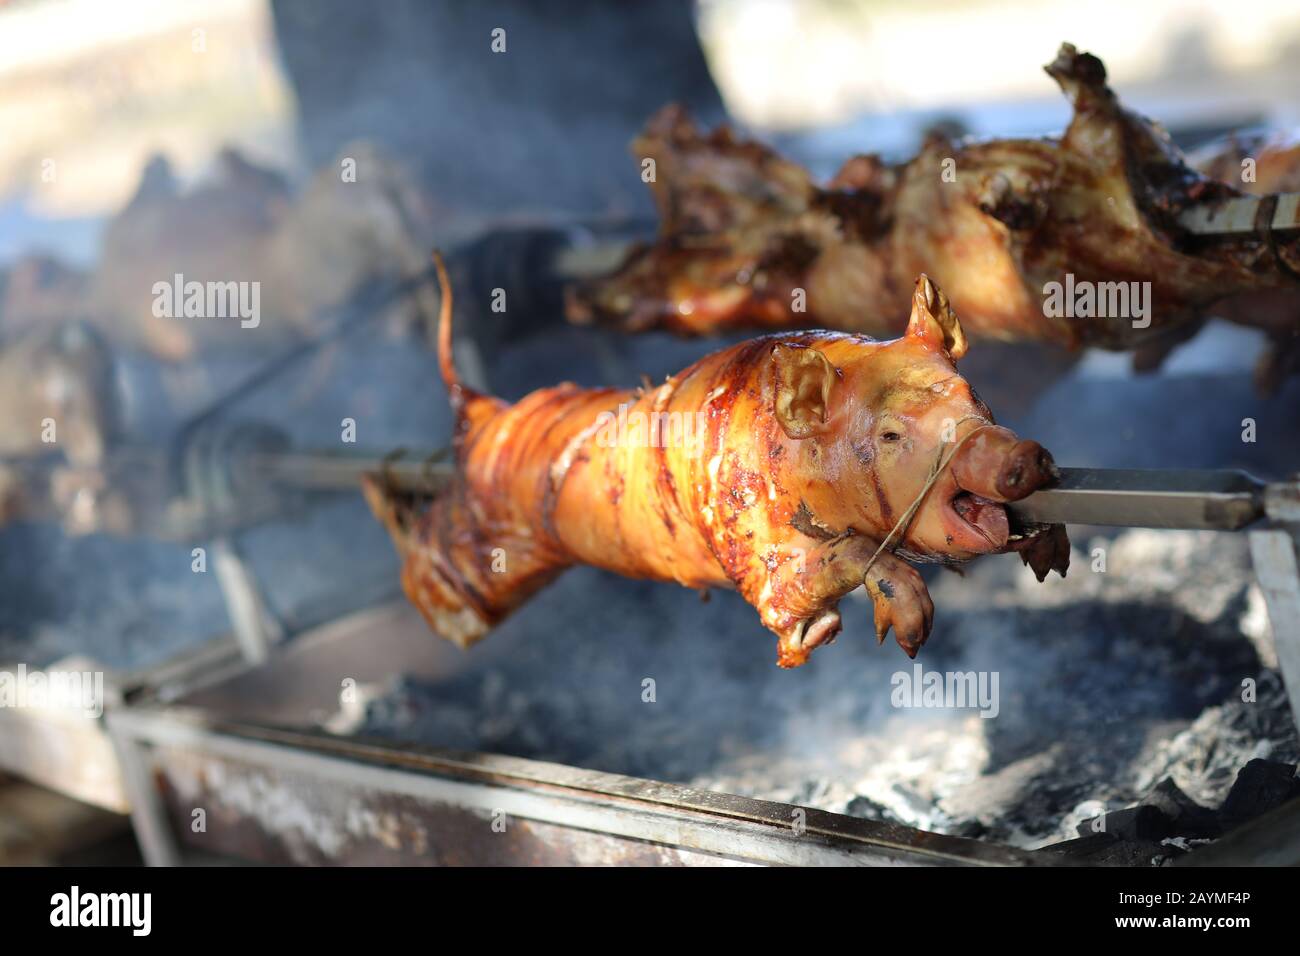 Pig roasting on stick. Street food concept Stock Photo